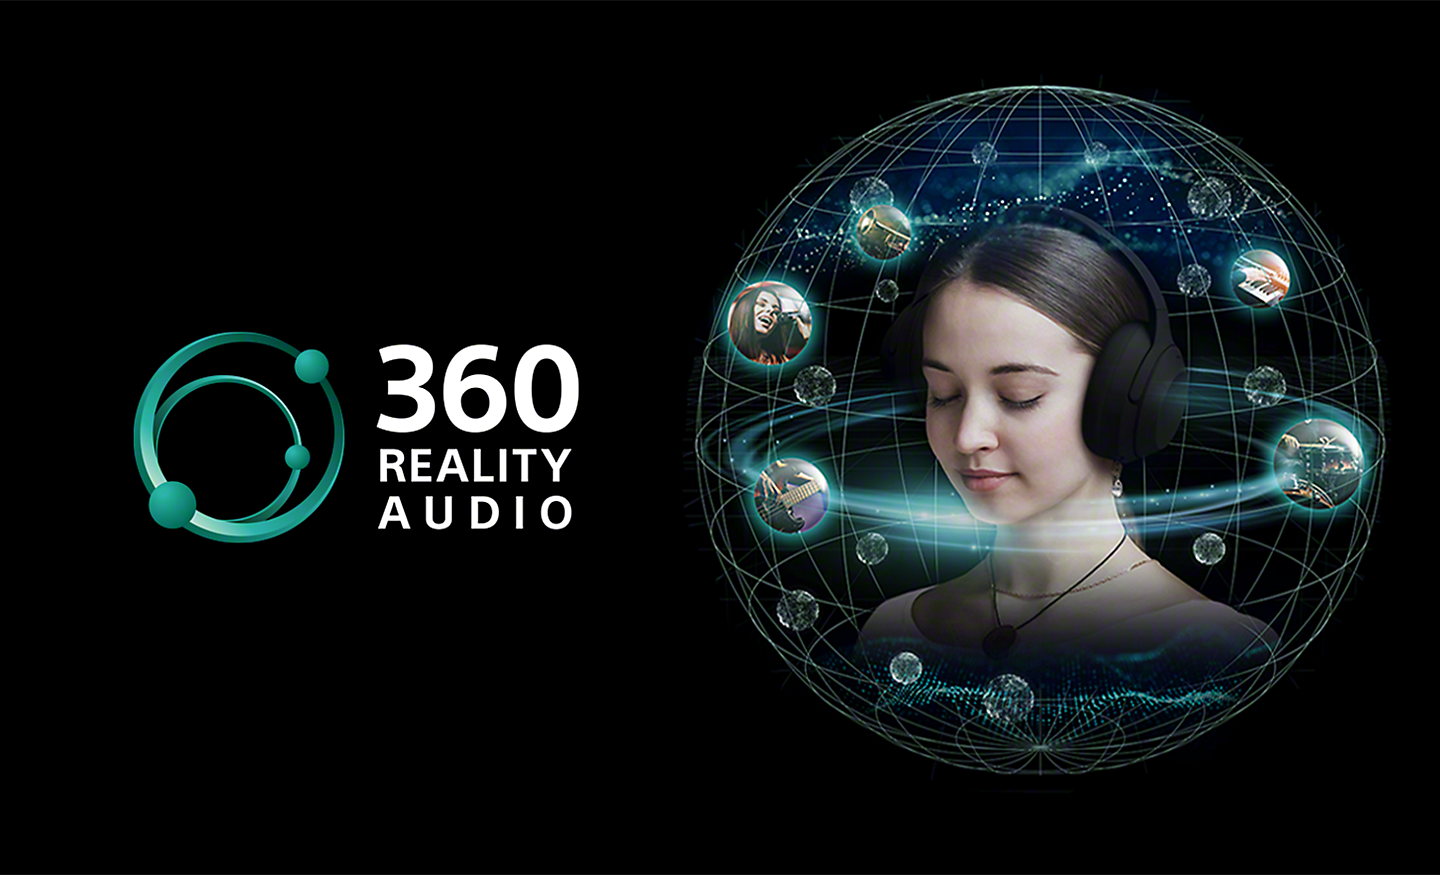 360 Reality Audio 標誌，旁邊是一位女士正在聆聽音樂的影像，一系列不同的曲目環繞在她的腦海